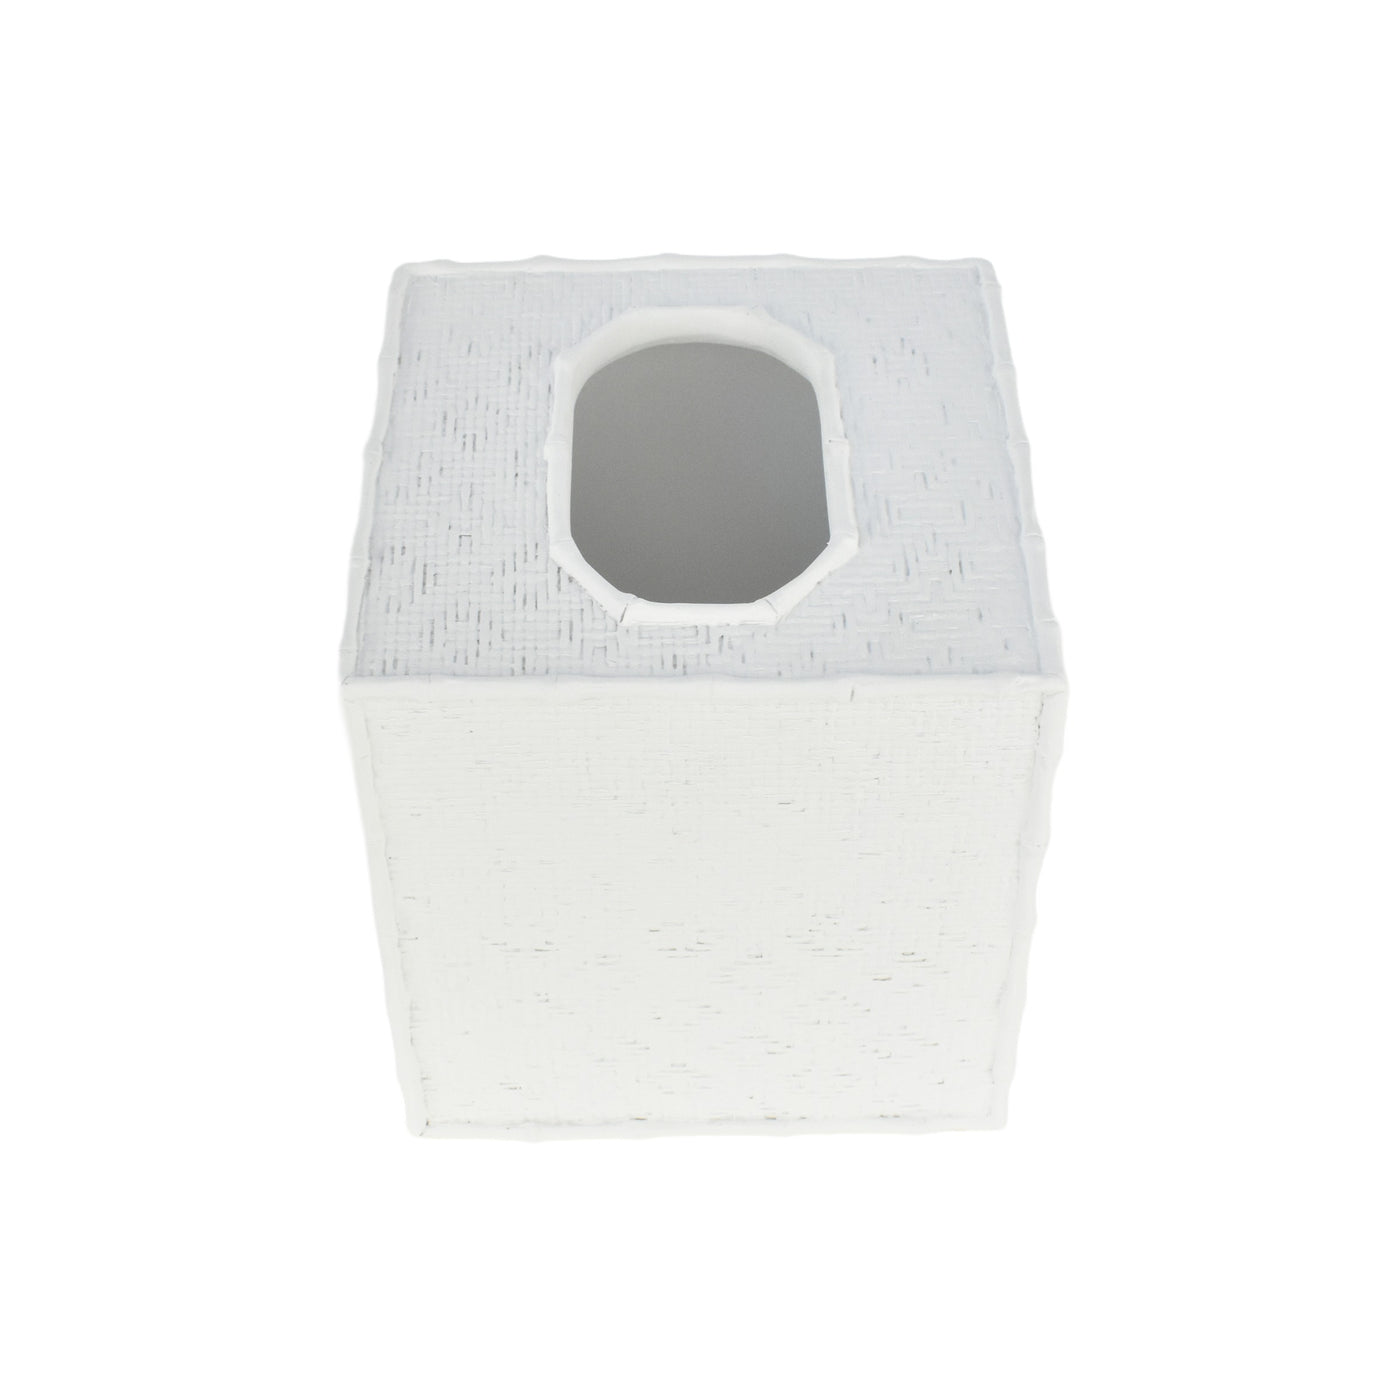 White Weave Square Tissue Box